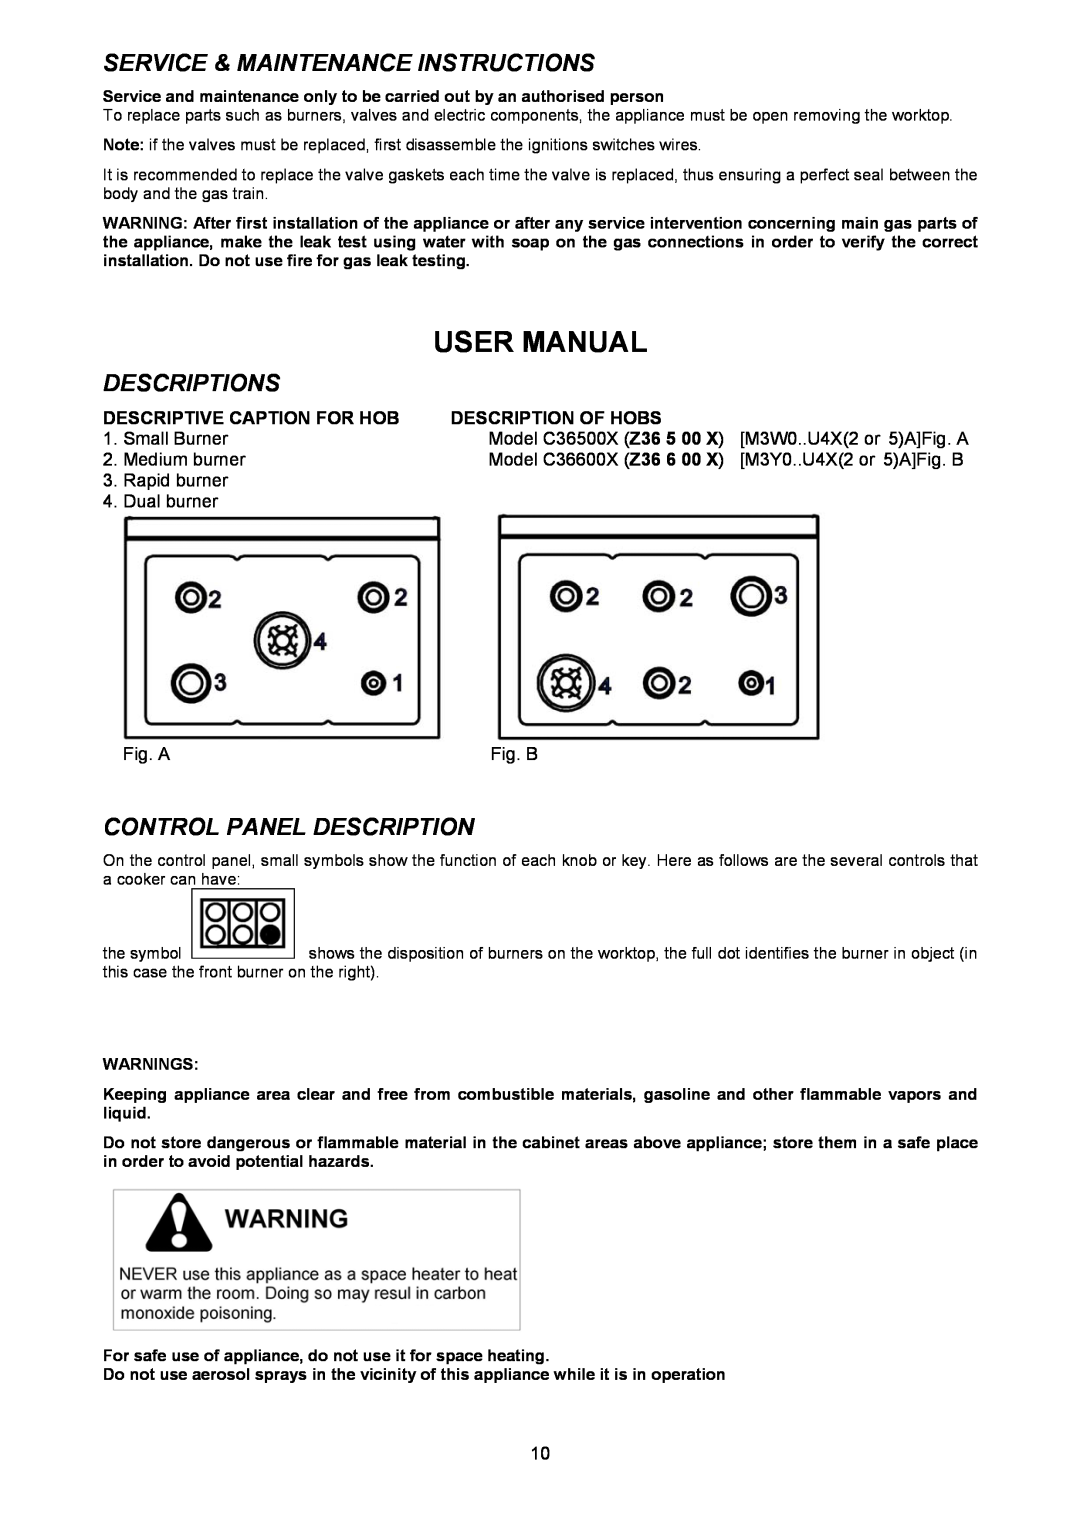 Bertazzoni Z36600X User Manual, Service & Maintenance Instructions, Descriptions, Control Panel Description, Warnings 